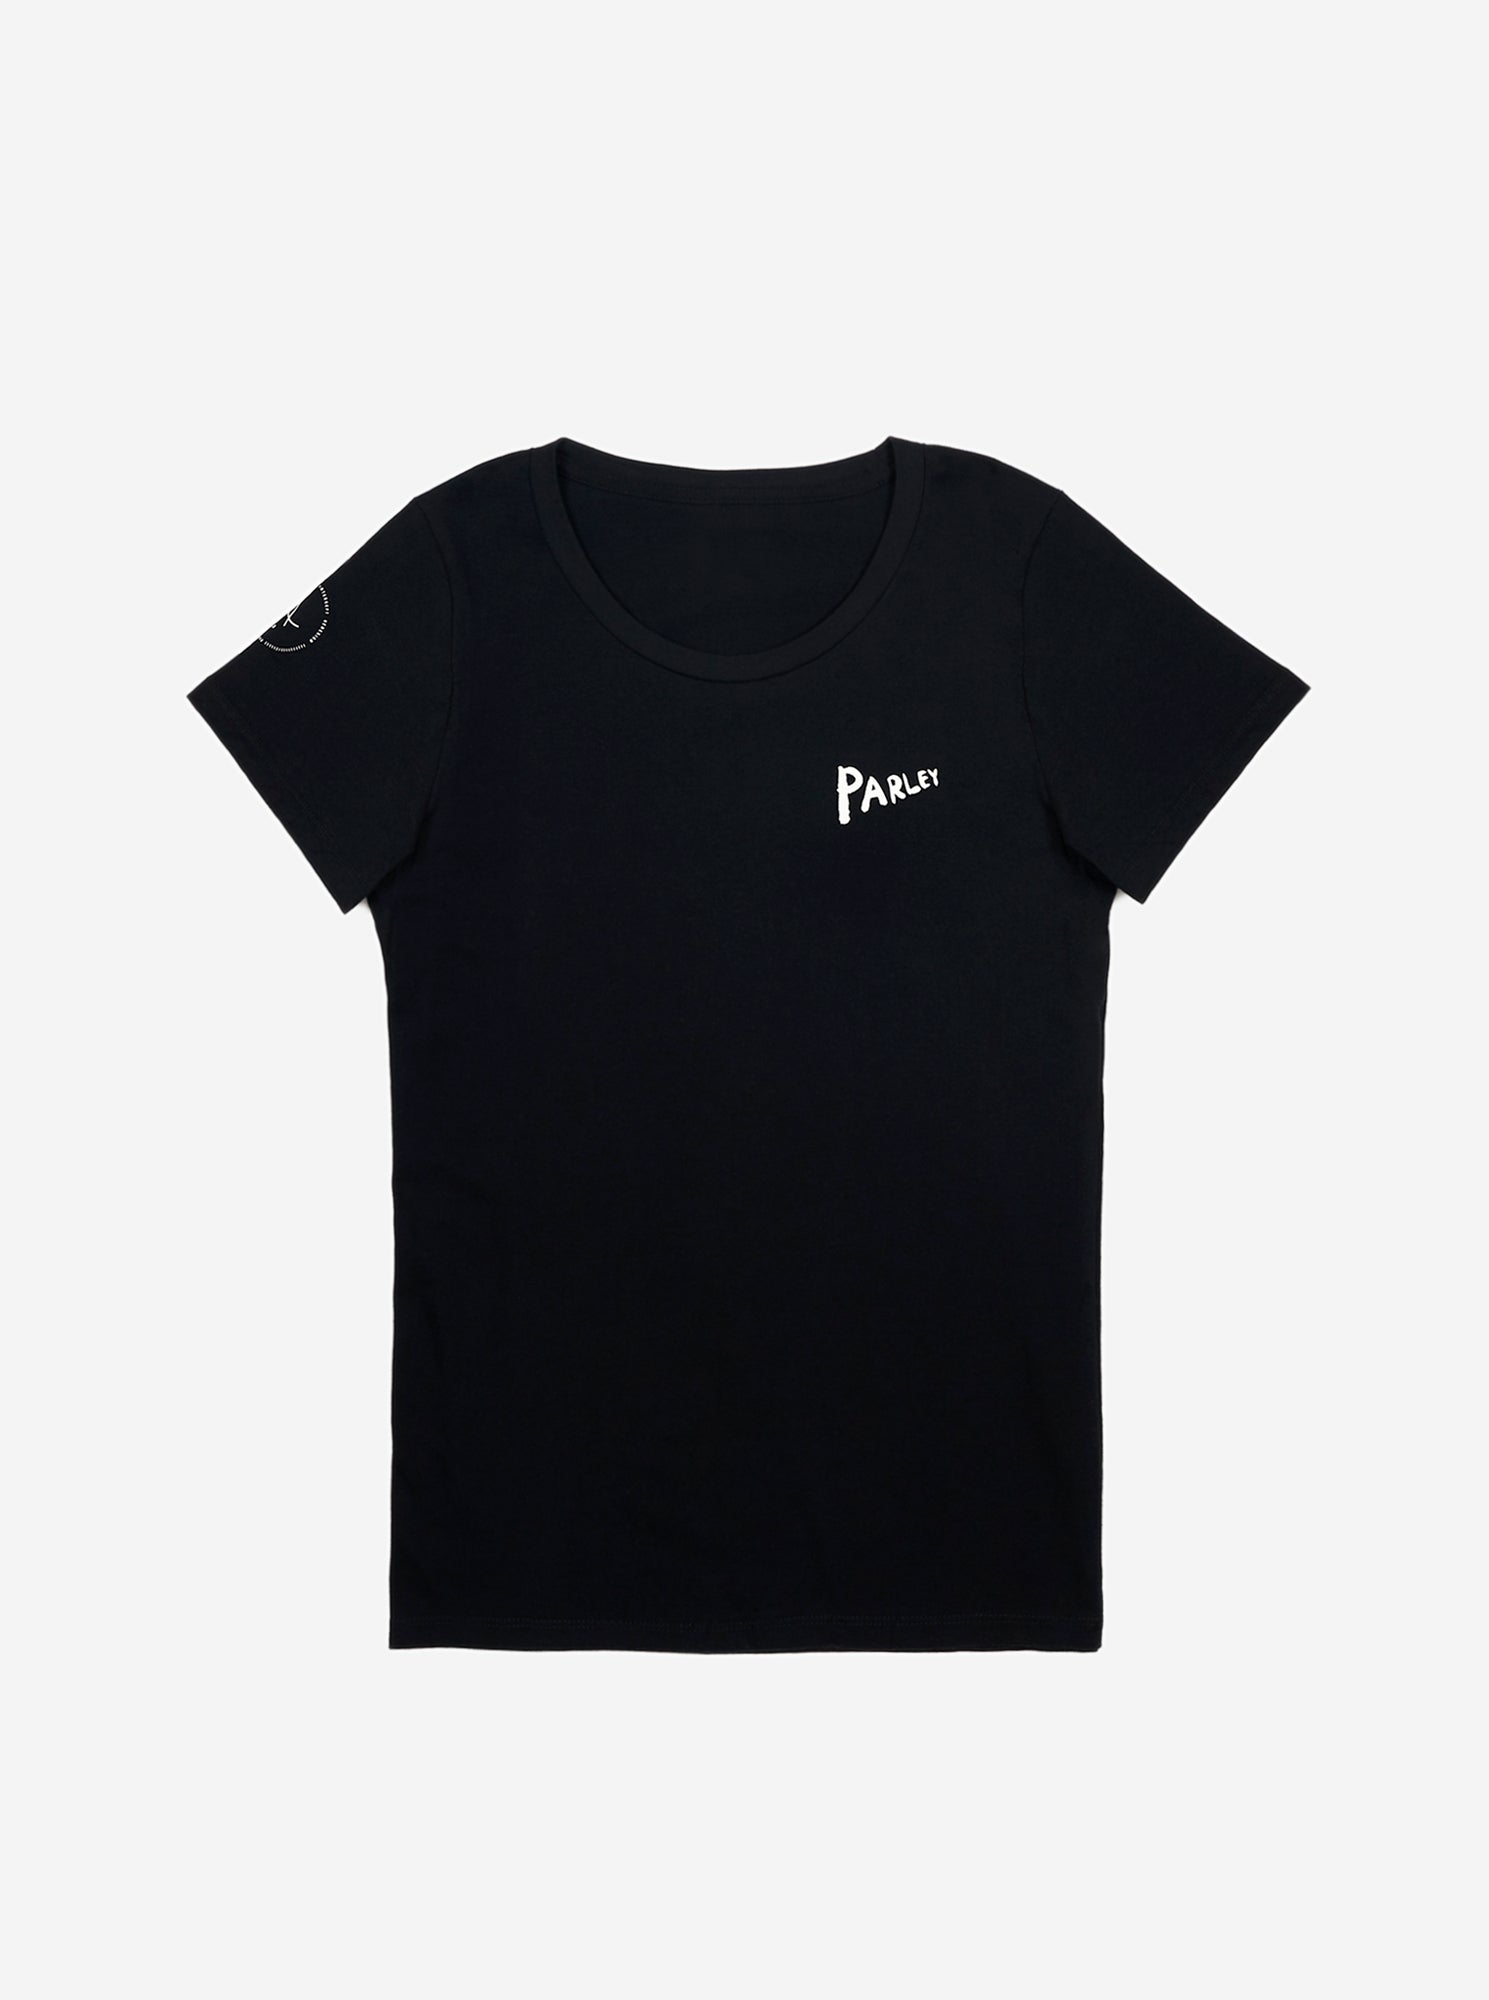 Parley Short Sleeve Women Tee – shop.parley.com